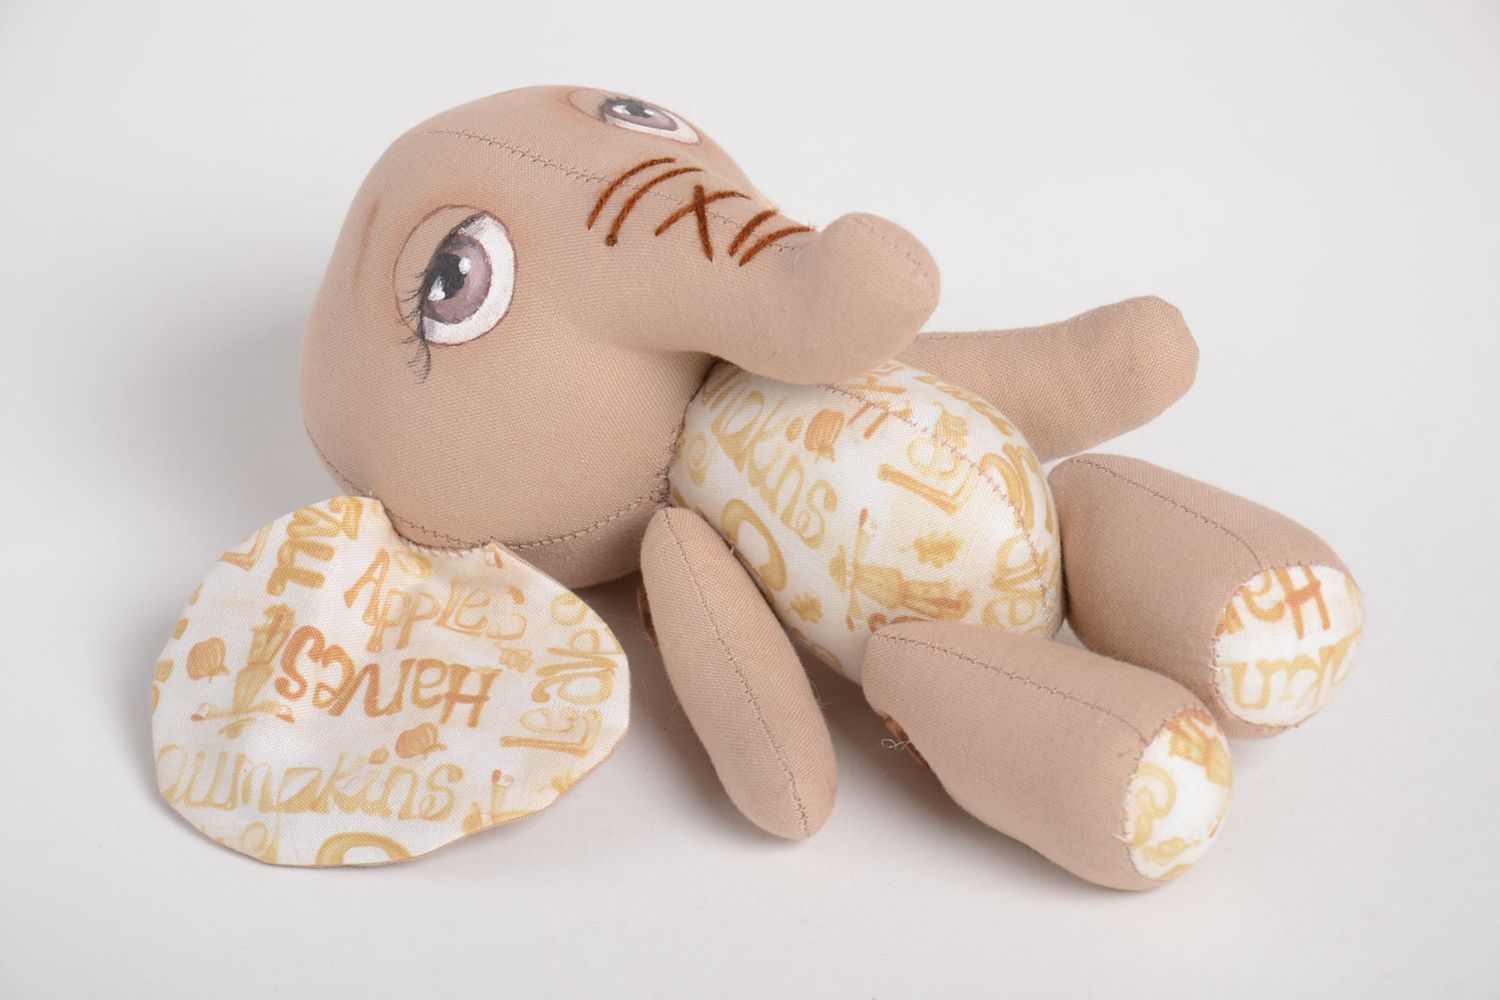 Handmade soft toy elephant stuffed doll for children interior decor ideas photo 5